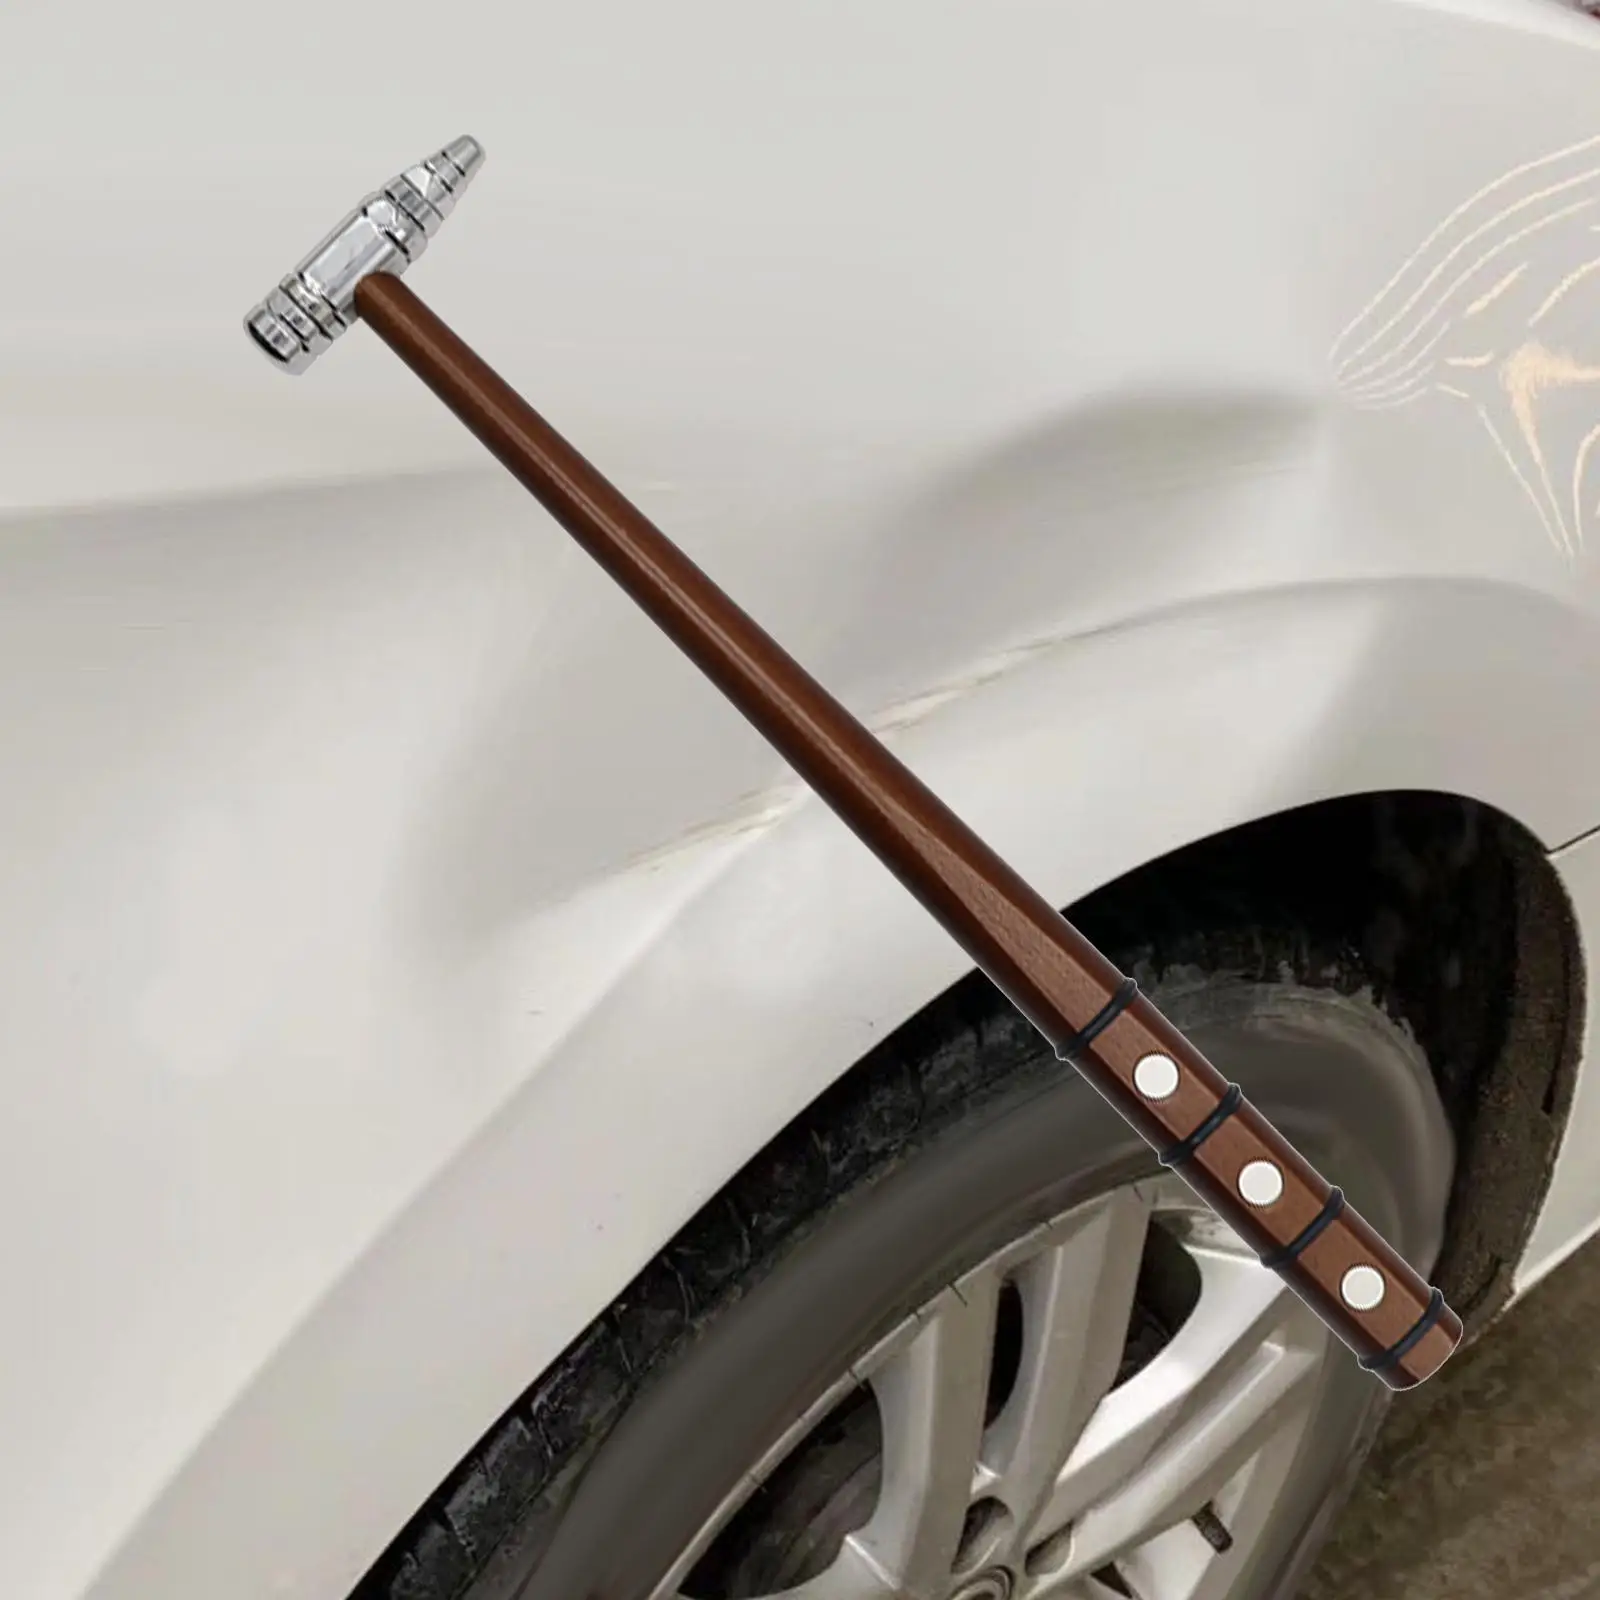 

Car Body Paintless Dents Repair Tool Hammer Shaping Tool Metal Sheet Repair Hammer Portable for Vehicles Hail Dents Removal